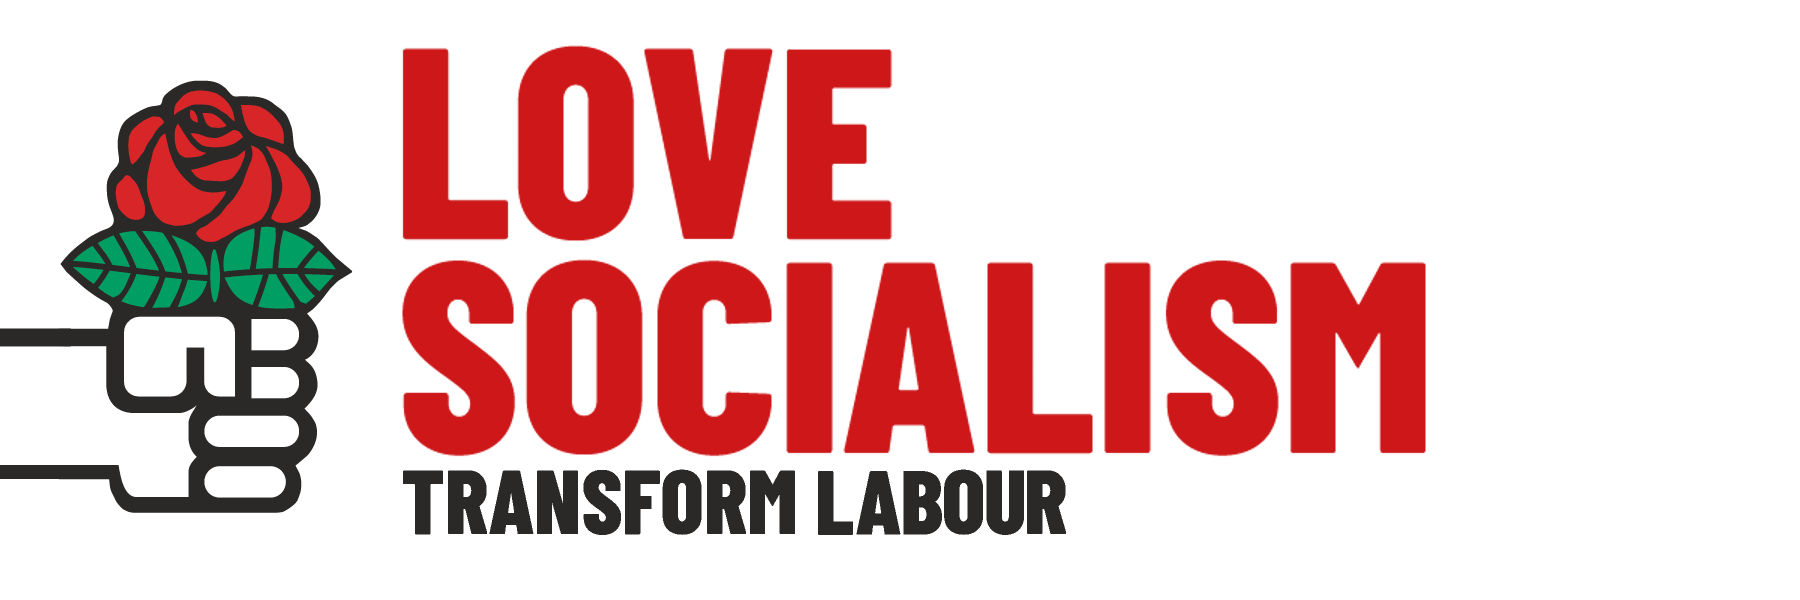 Love Socialism Hate Brexit